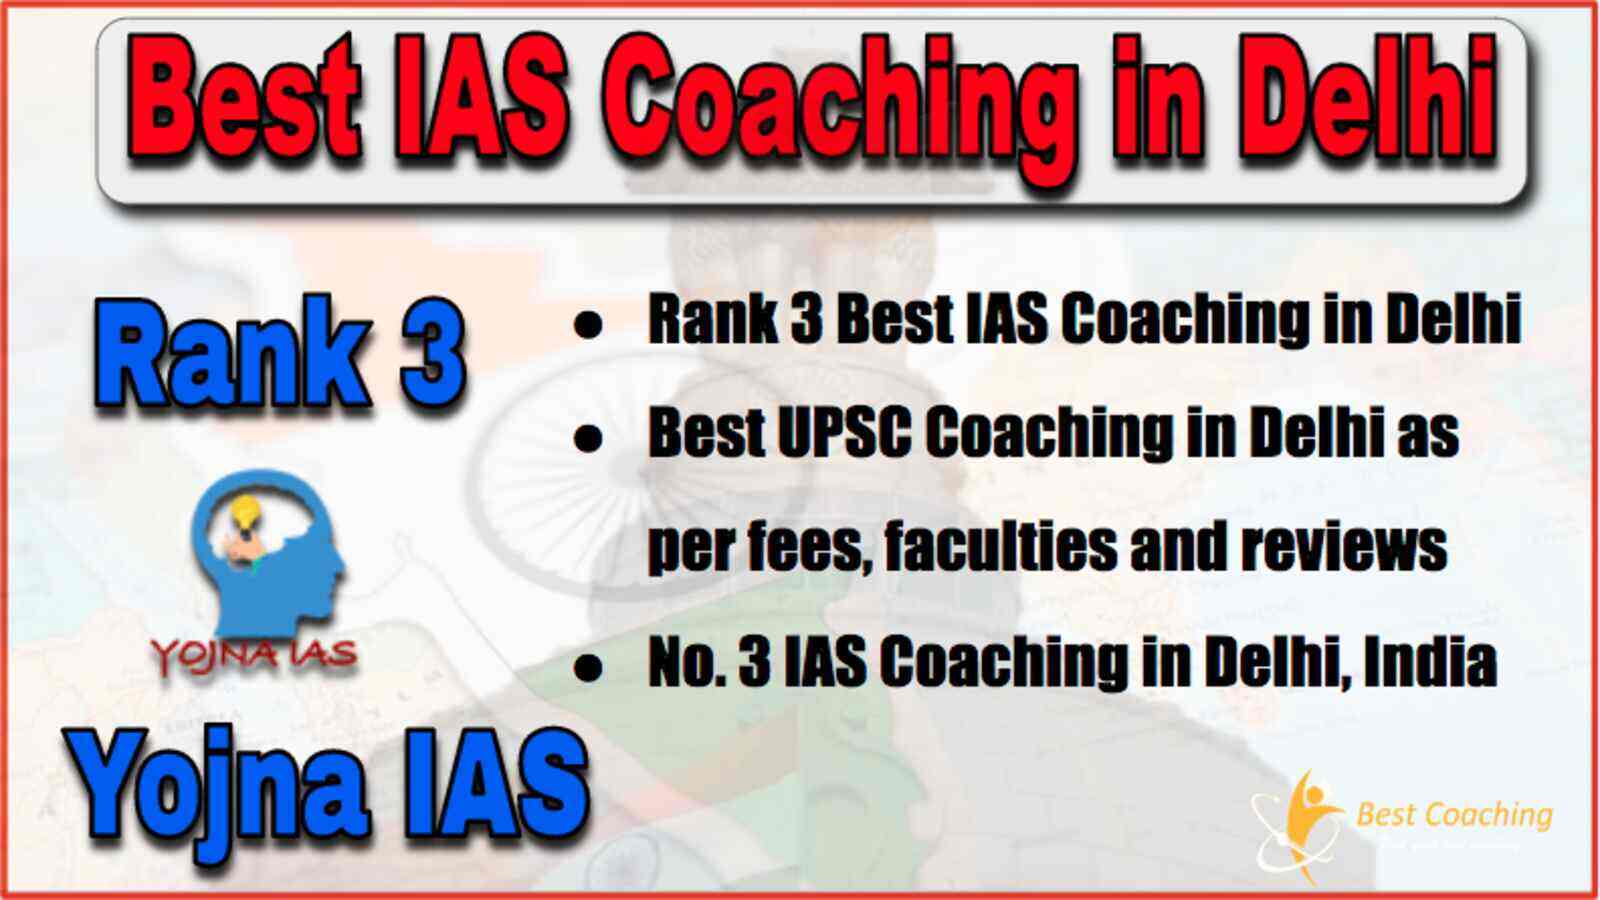 Best IAS Coaching in delhi. Best IAS Preparation in Delhi